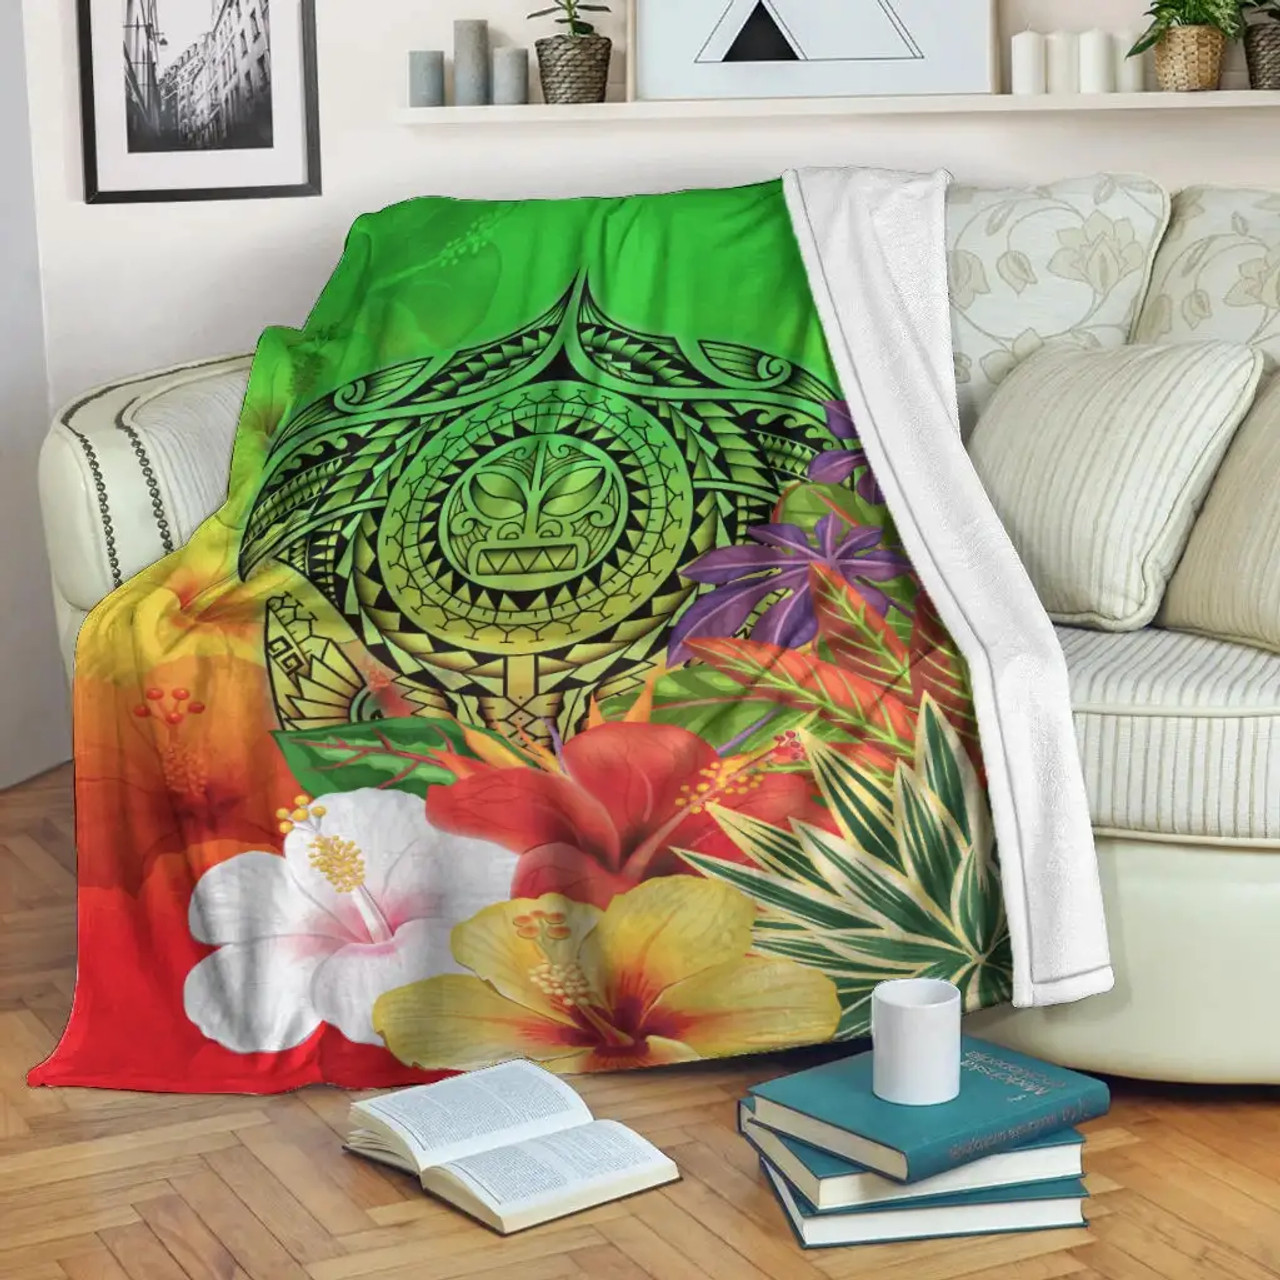 Polynesian Premium Blanket - Manta Ray Tropical Flowers (Green) 2